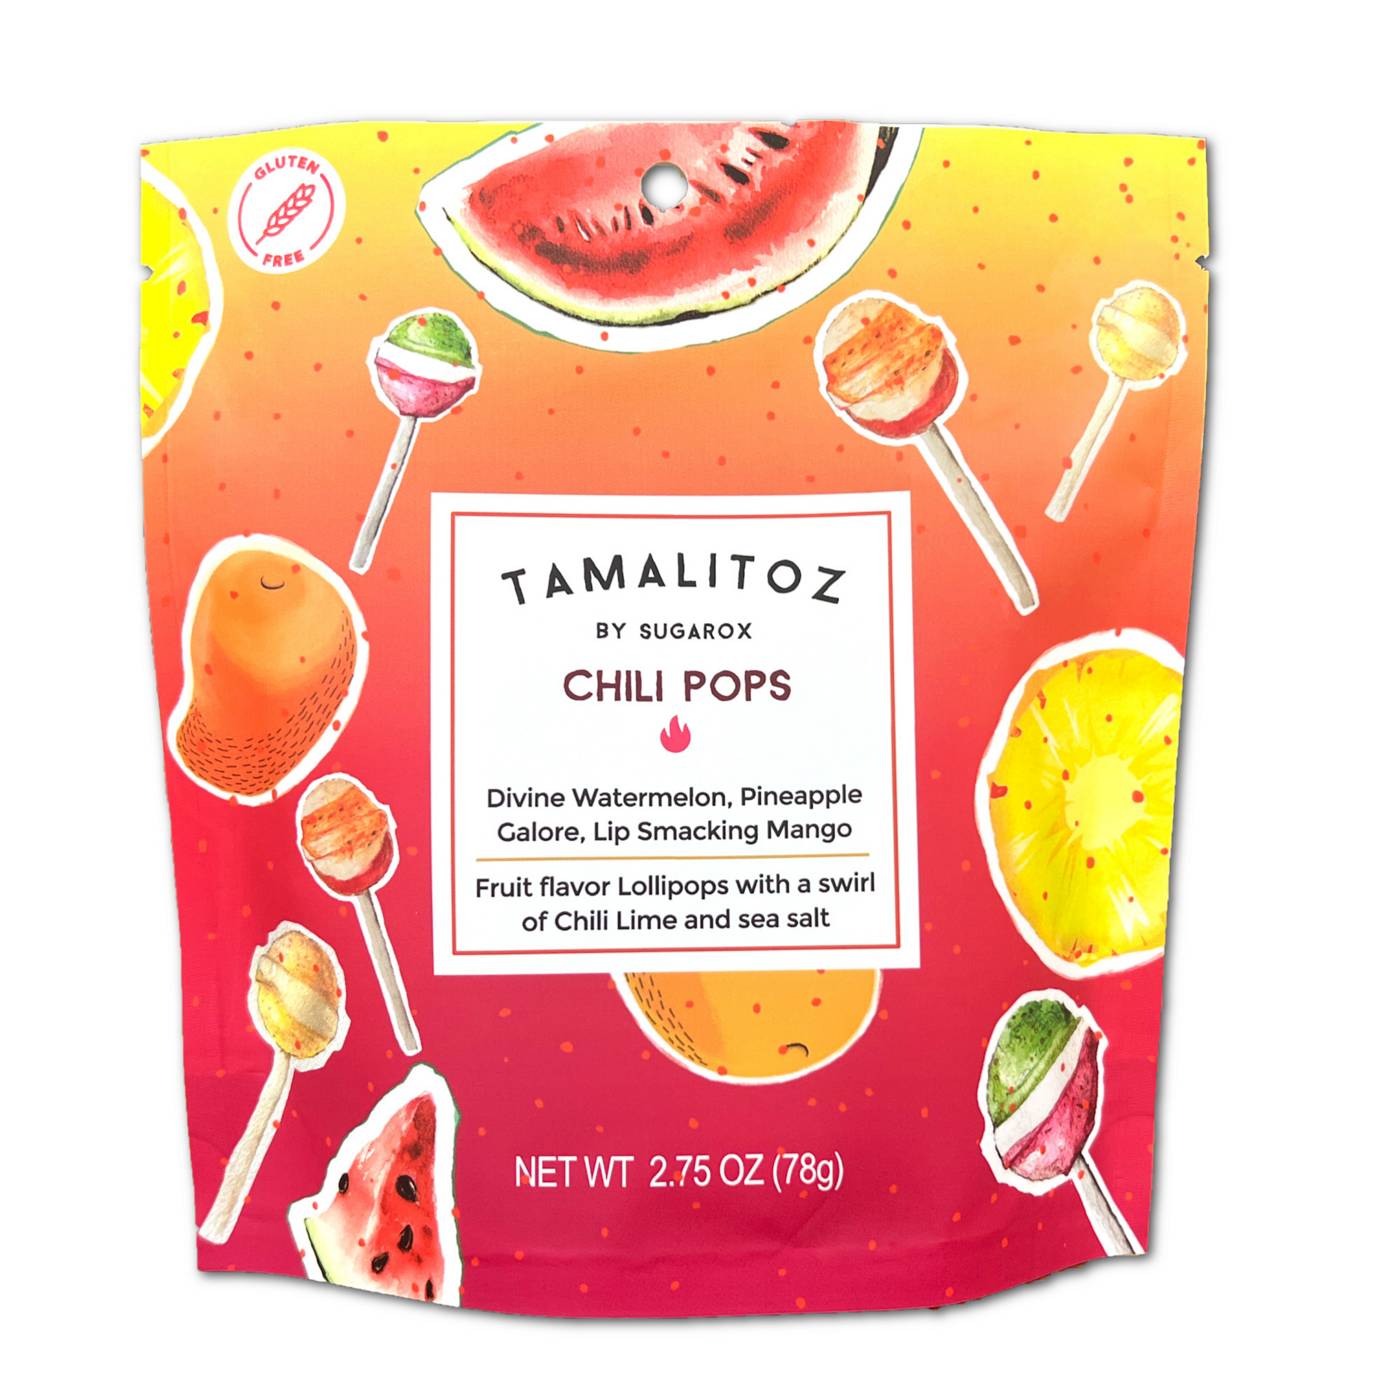 Tamalitoz Chili Pops; image 1 of 2